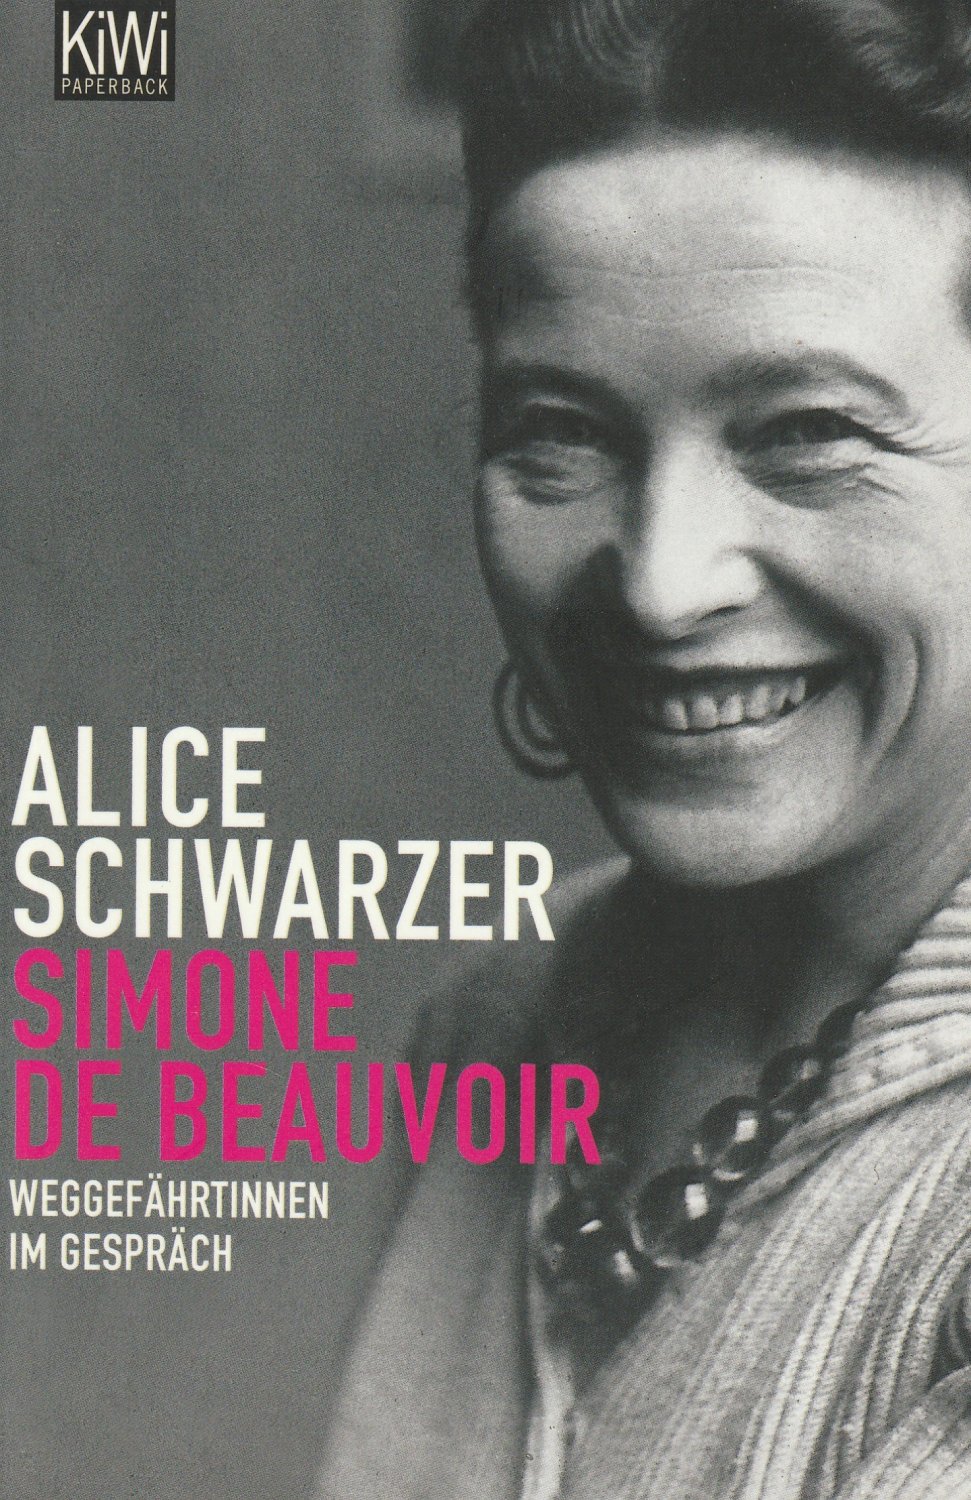 Simone de Beauvoir. Weggefährtinnen im Gespräch.  2. Auflage. - Beauvoir, Simone de - Schwarzer, Alice